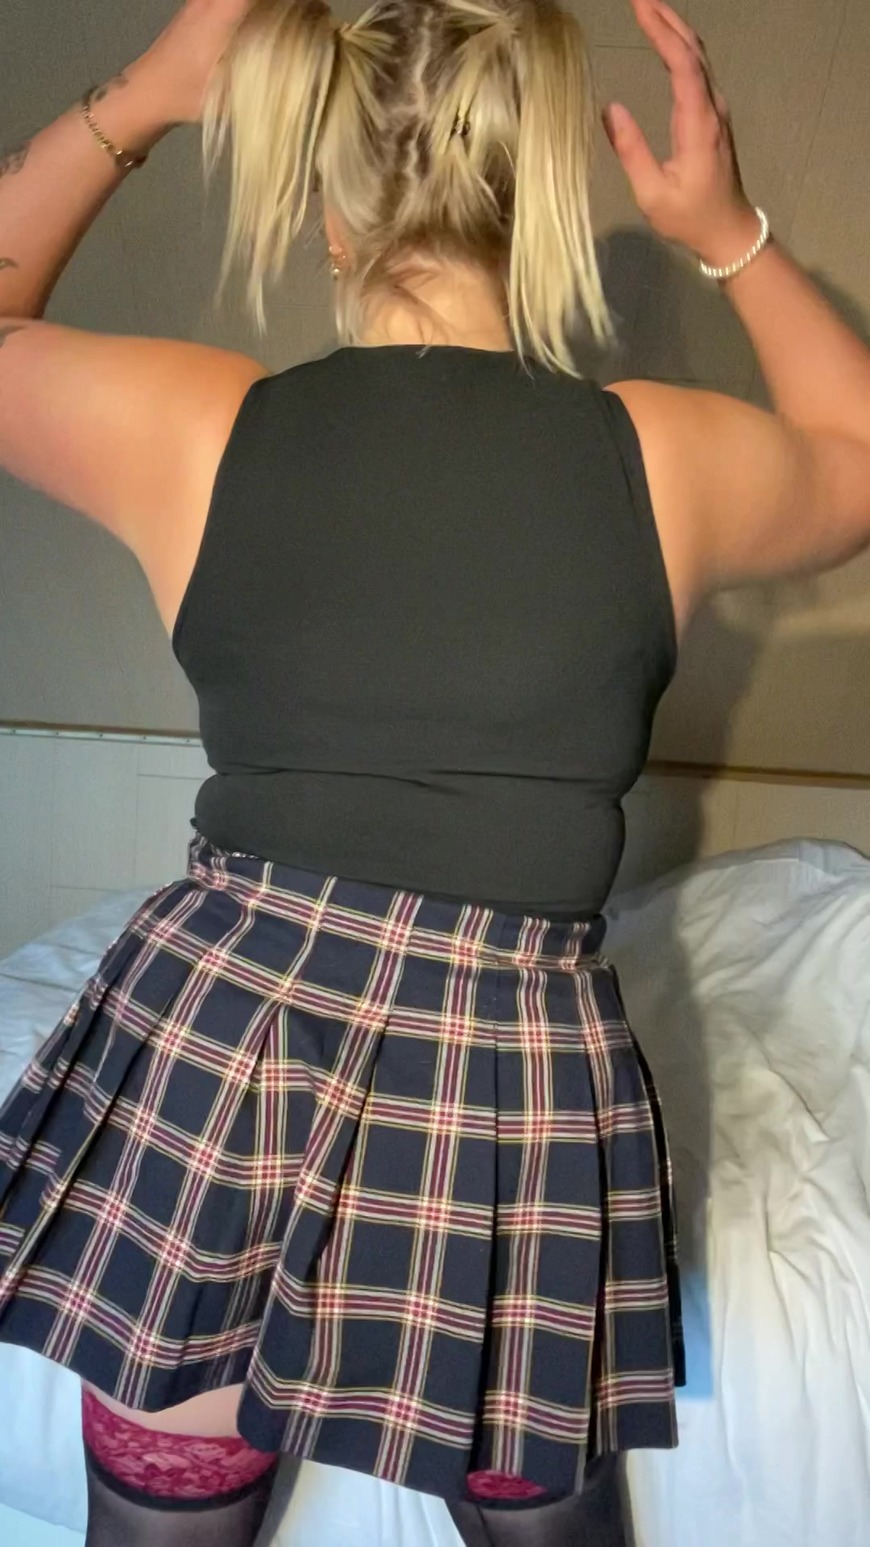 Hot teacher is twerking for you with her big fat assðŸ¥µðŸ˜ˆ - clip coverforeground